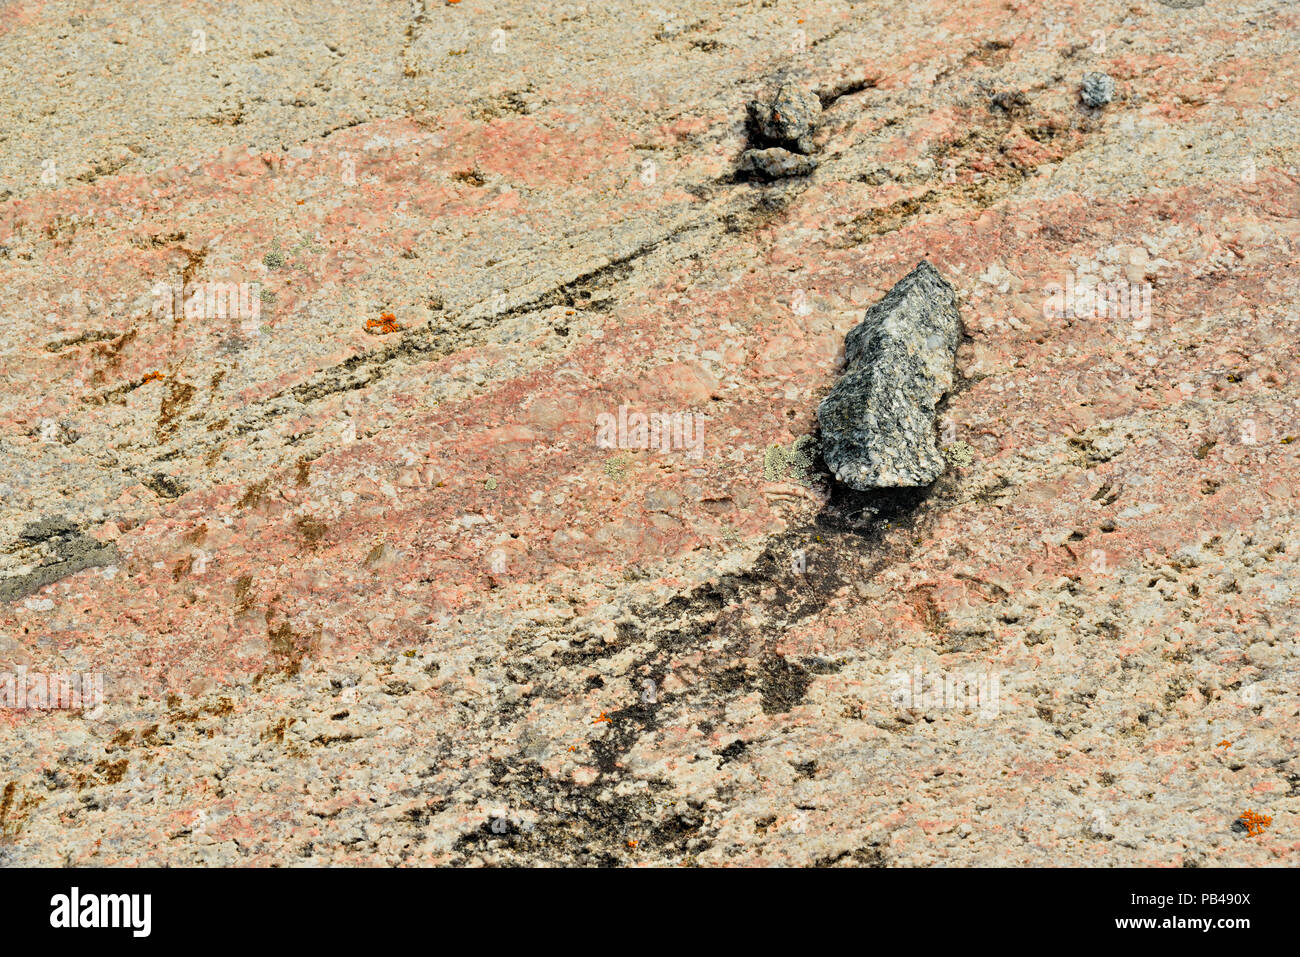 Precambrian rock outcrops with lichens, near Yellowknife, Northwest Territories, Canada Stock Photo